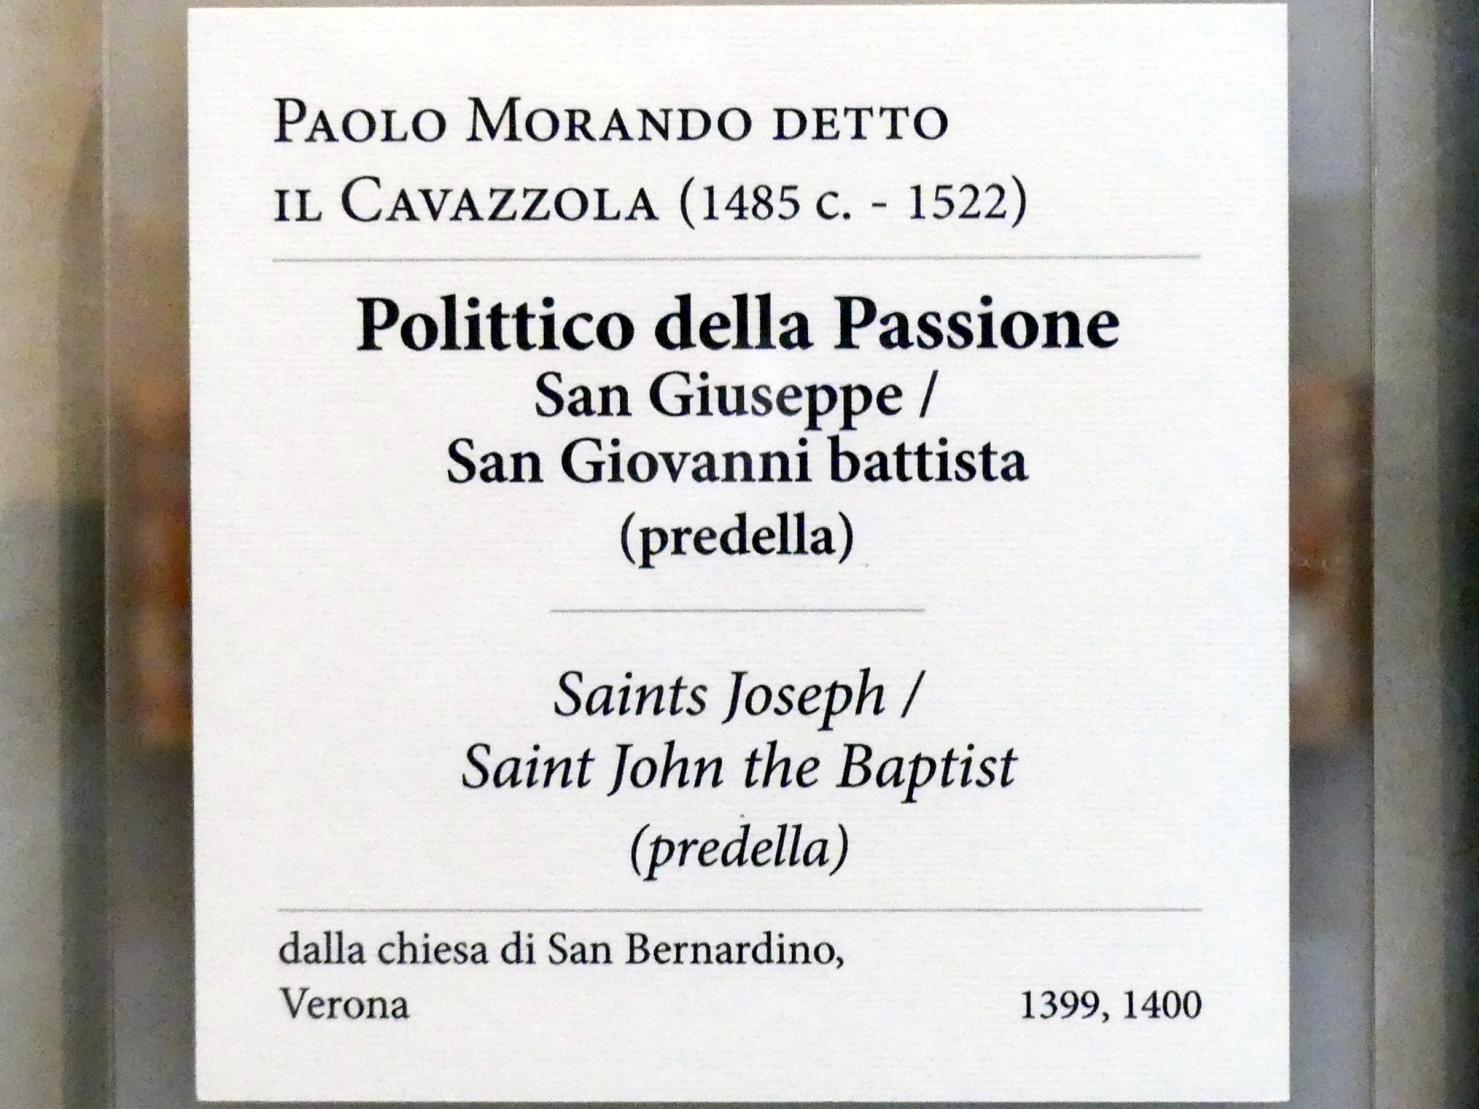 Paolo Morando (Cavazzola) (1504–1522), Predella des Polyptychons der Passion, Verona, chiesa San Bernardino, jetzt Verona, Museo di Castelvecchio, Saal 20, 1517, Bild 6/7